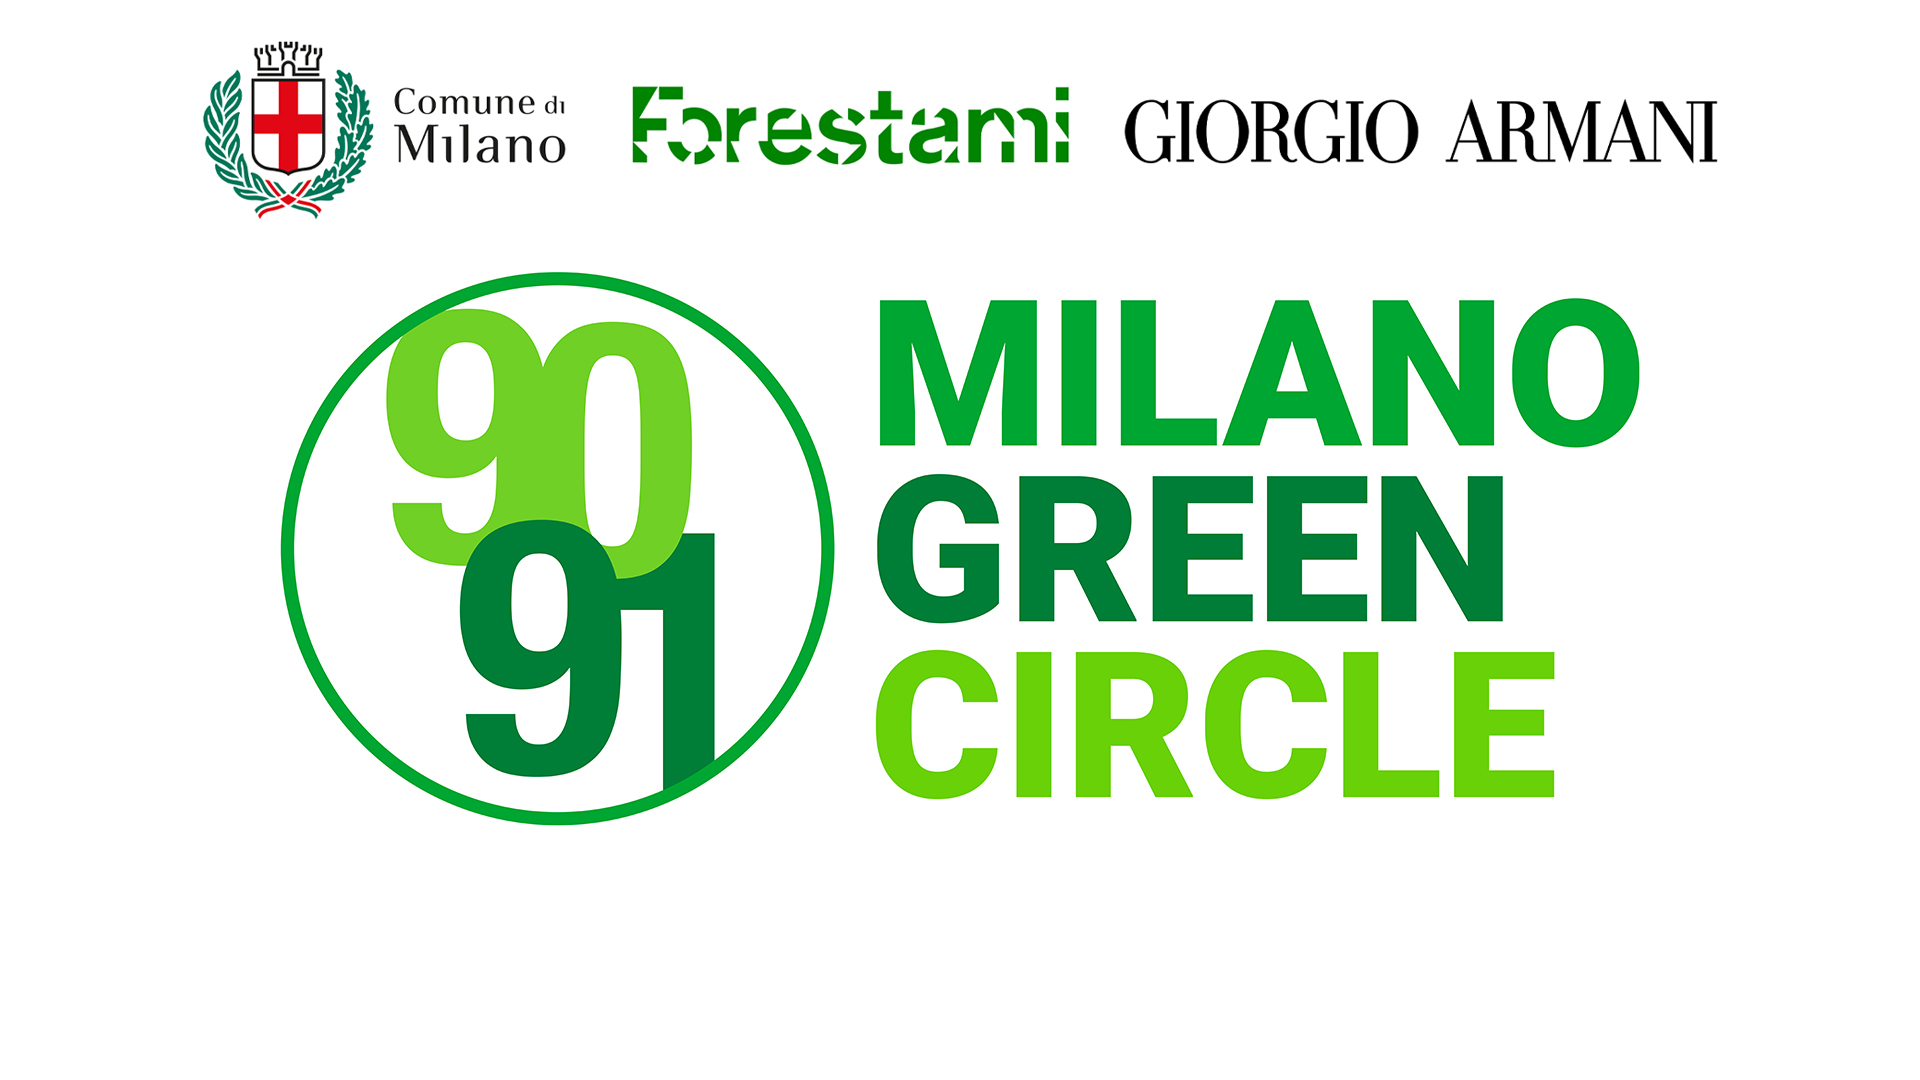 giorgio-armani-forestami-milano-green-circle-90-91-desktop